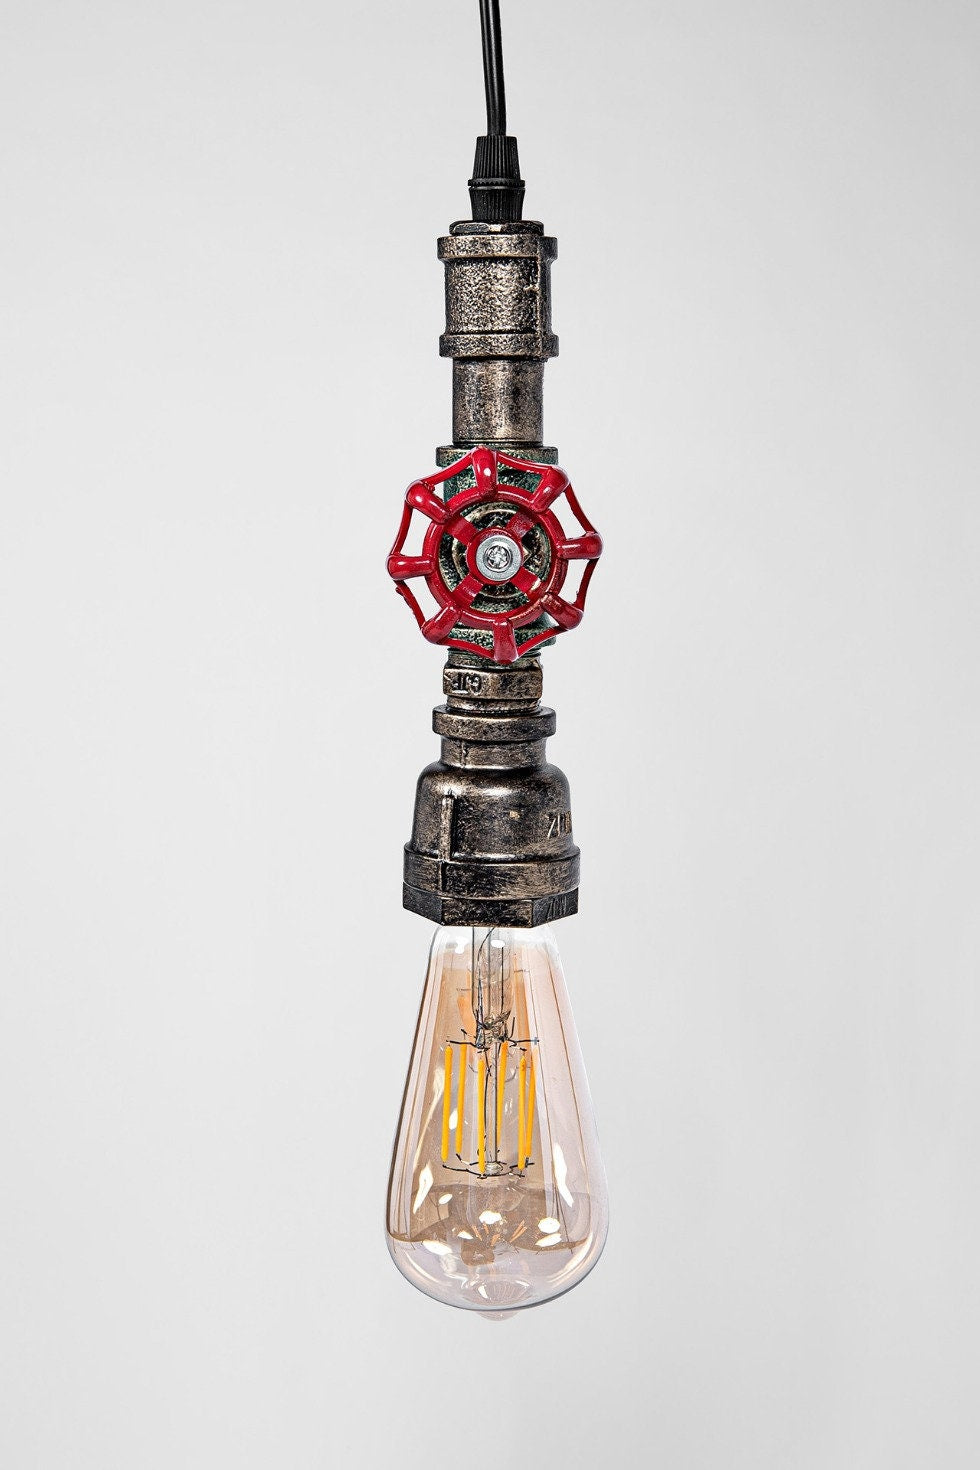 Dr. Nickel - Retro vintage industrial design pendant lamp made of metal